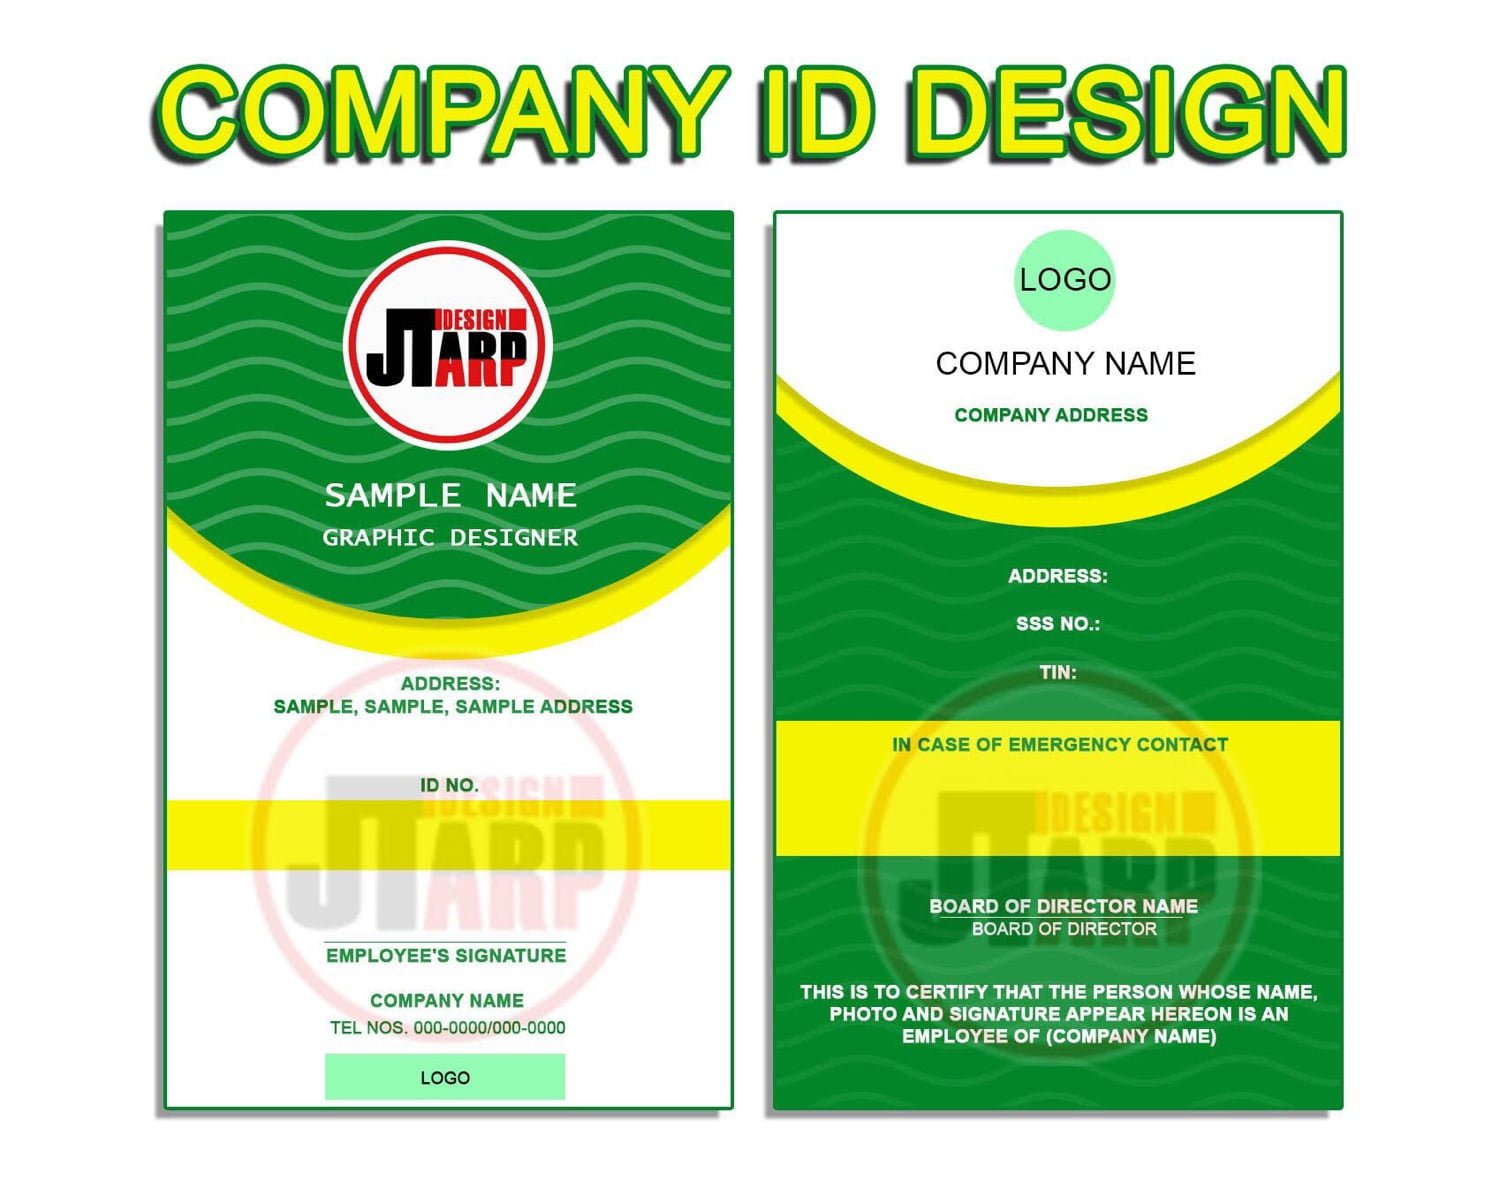 Company ID Sample Template